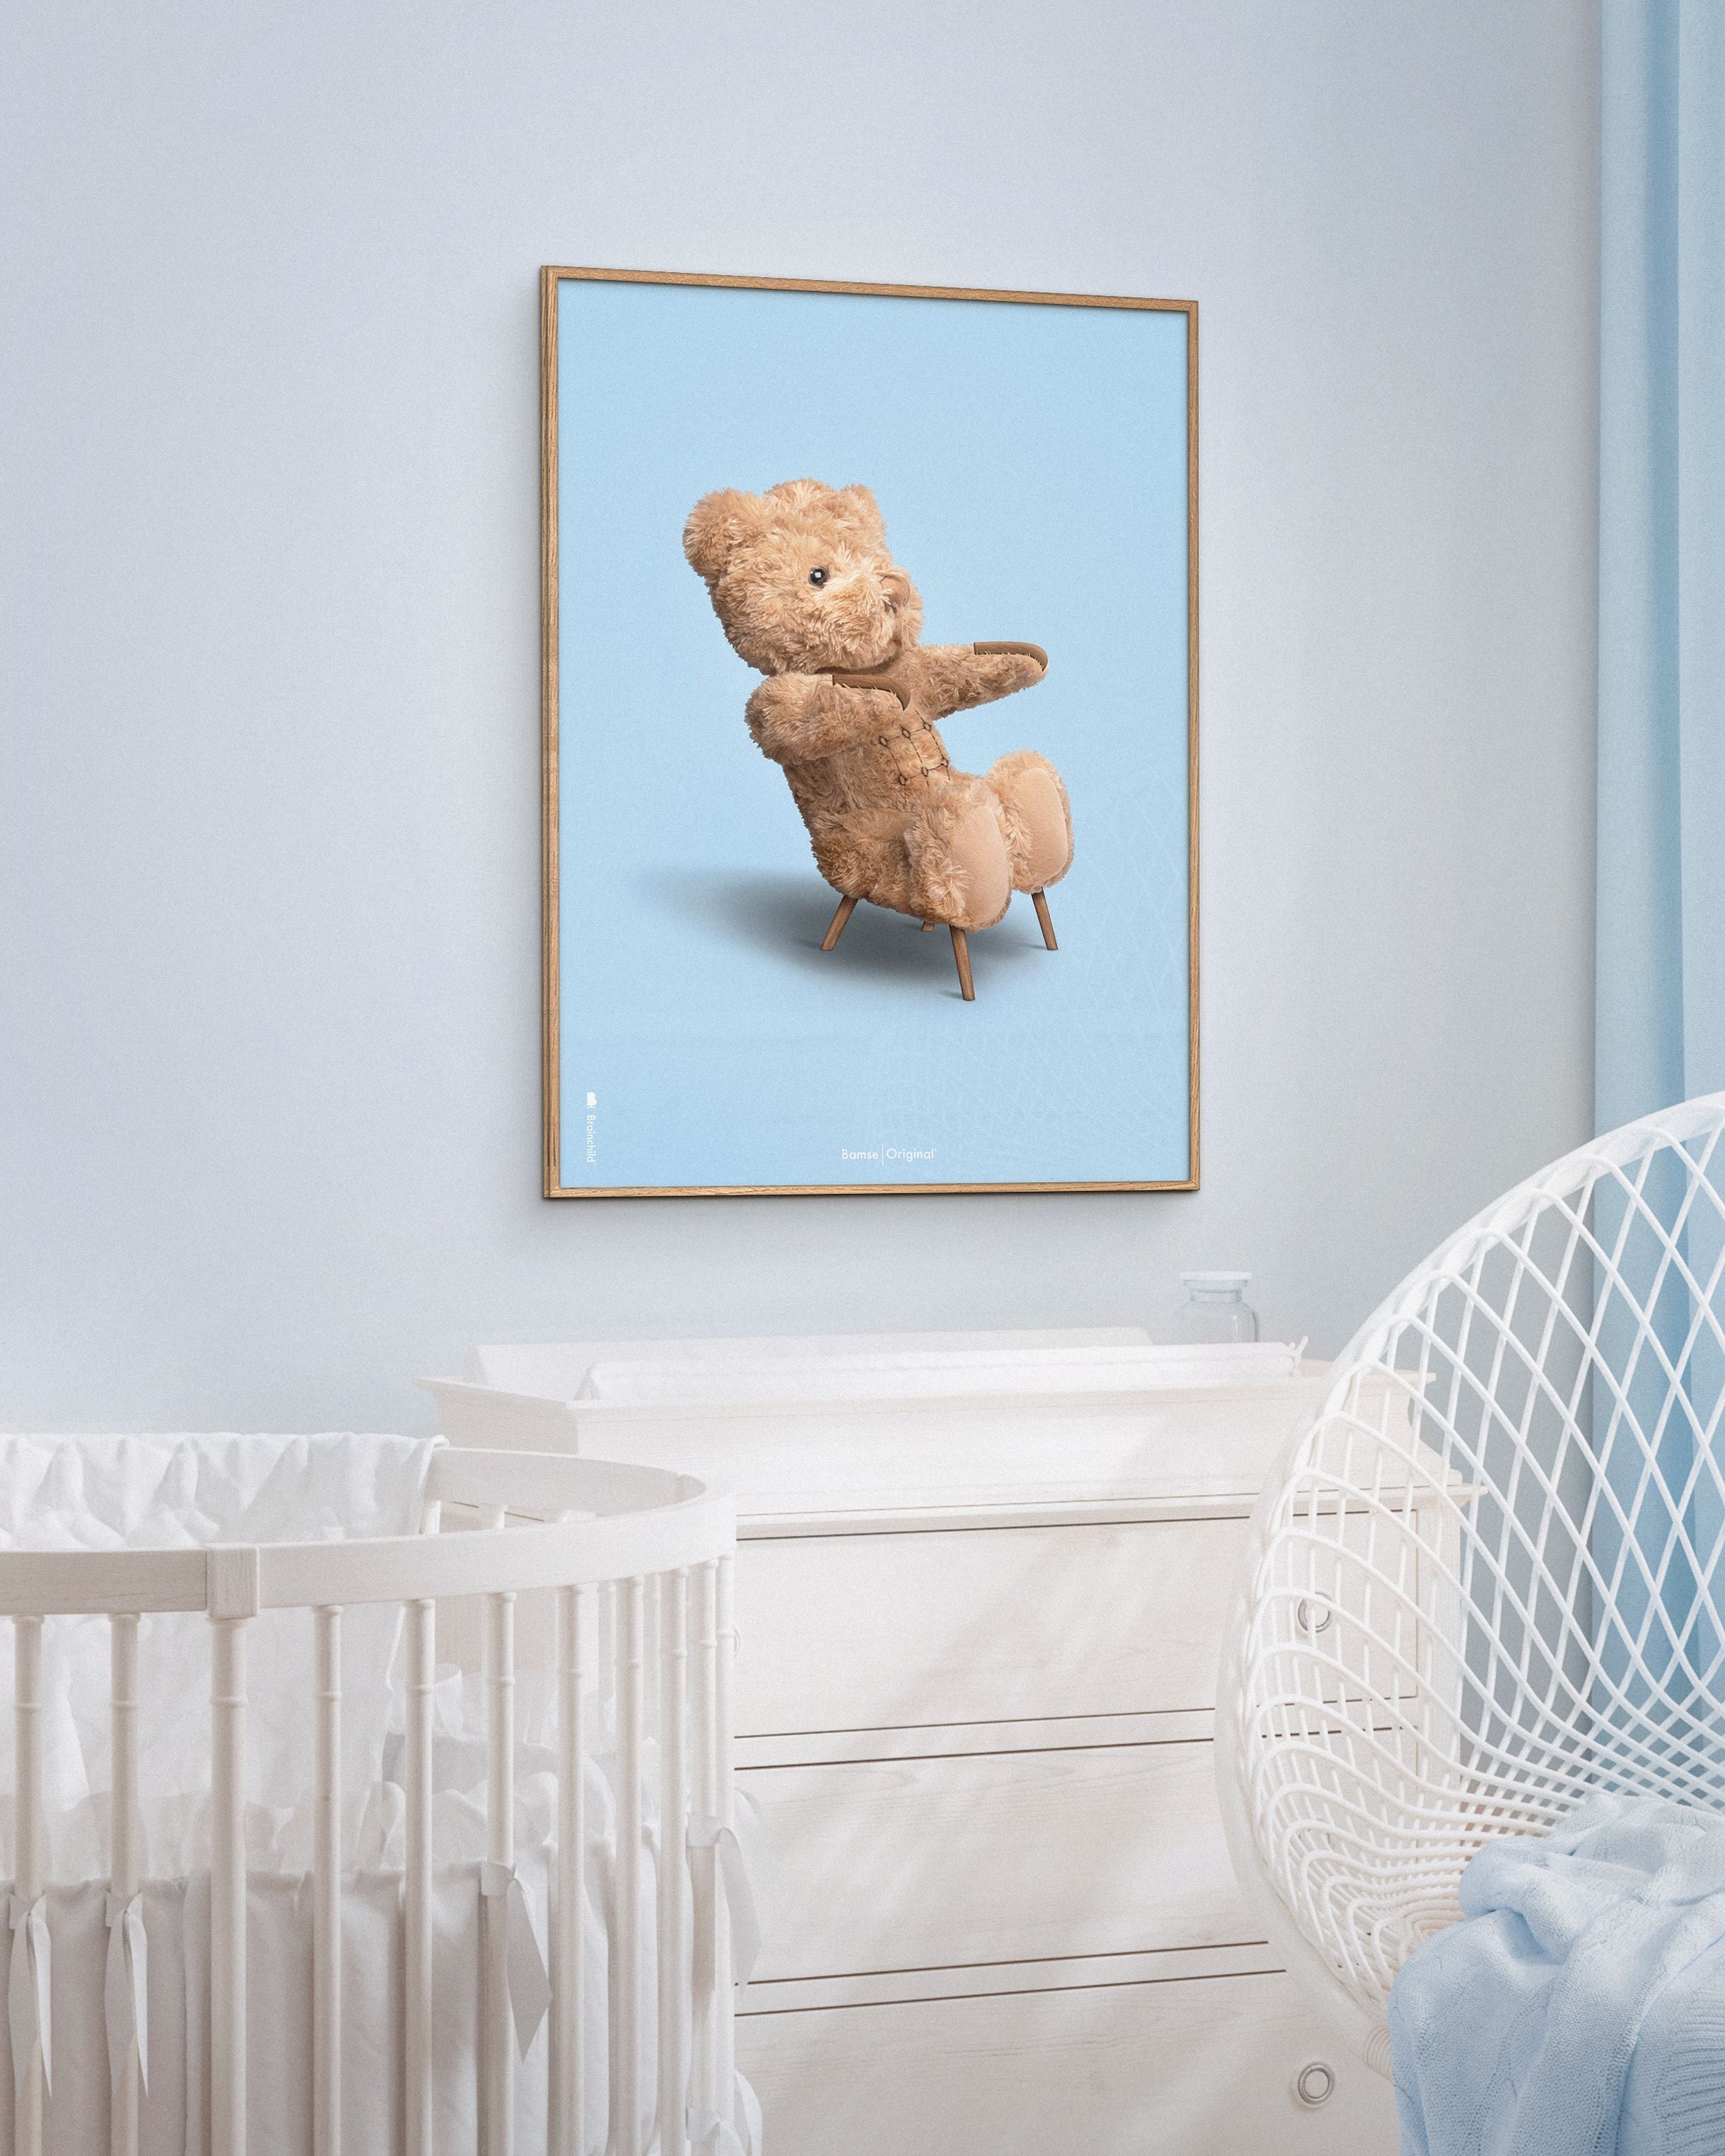 Brainchild Nallebjörn klassisk affischram gjord av lätt trä ramme 70x100 cm, ljusblå bakgrund